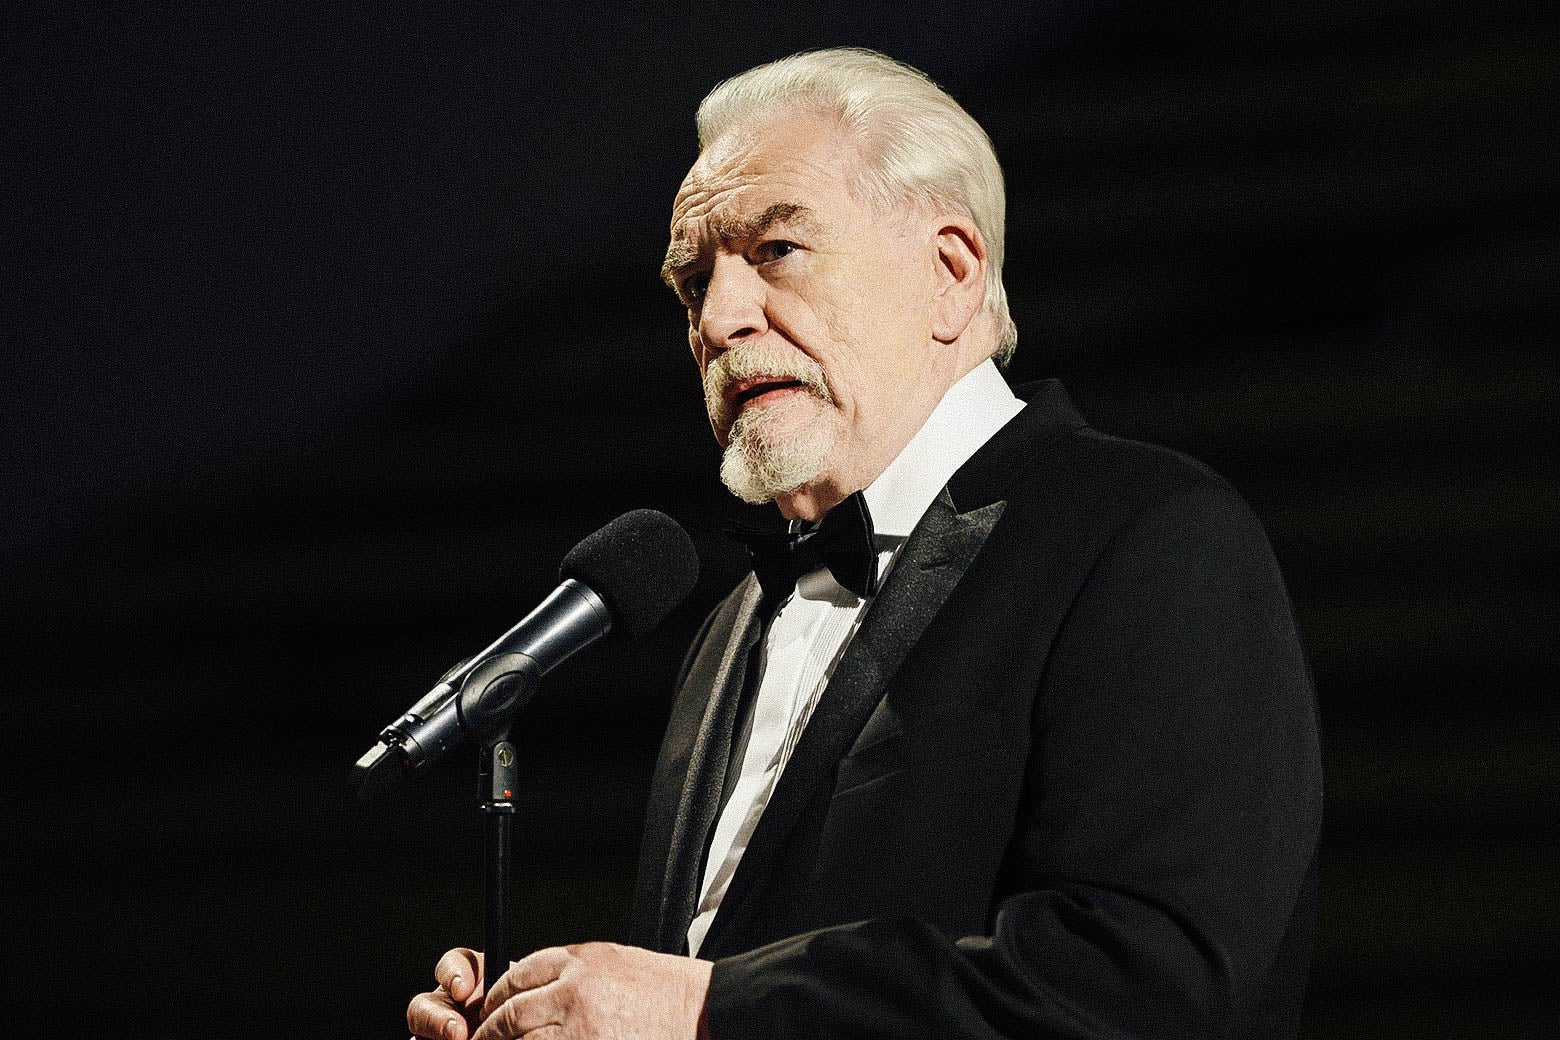 A man in a tuxedo talks into a microphone.